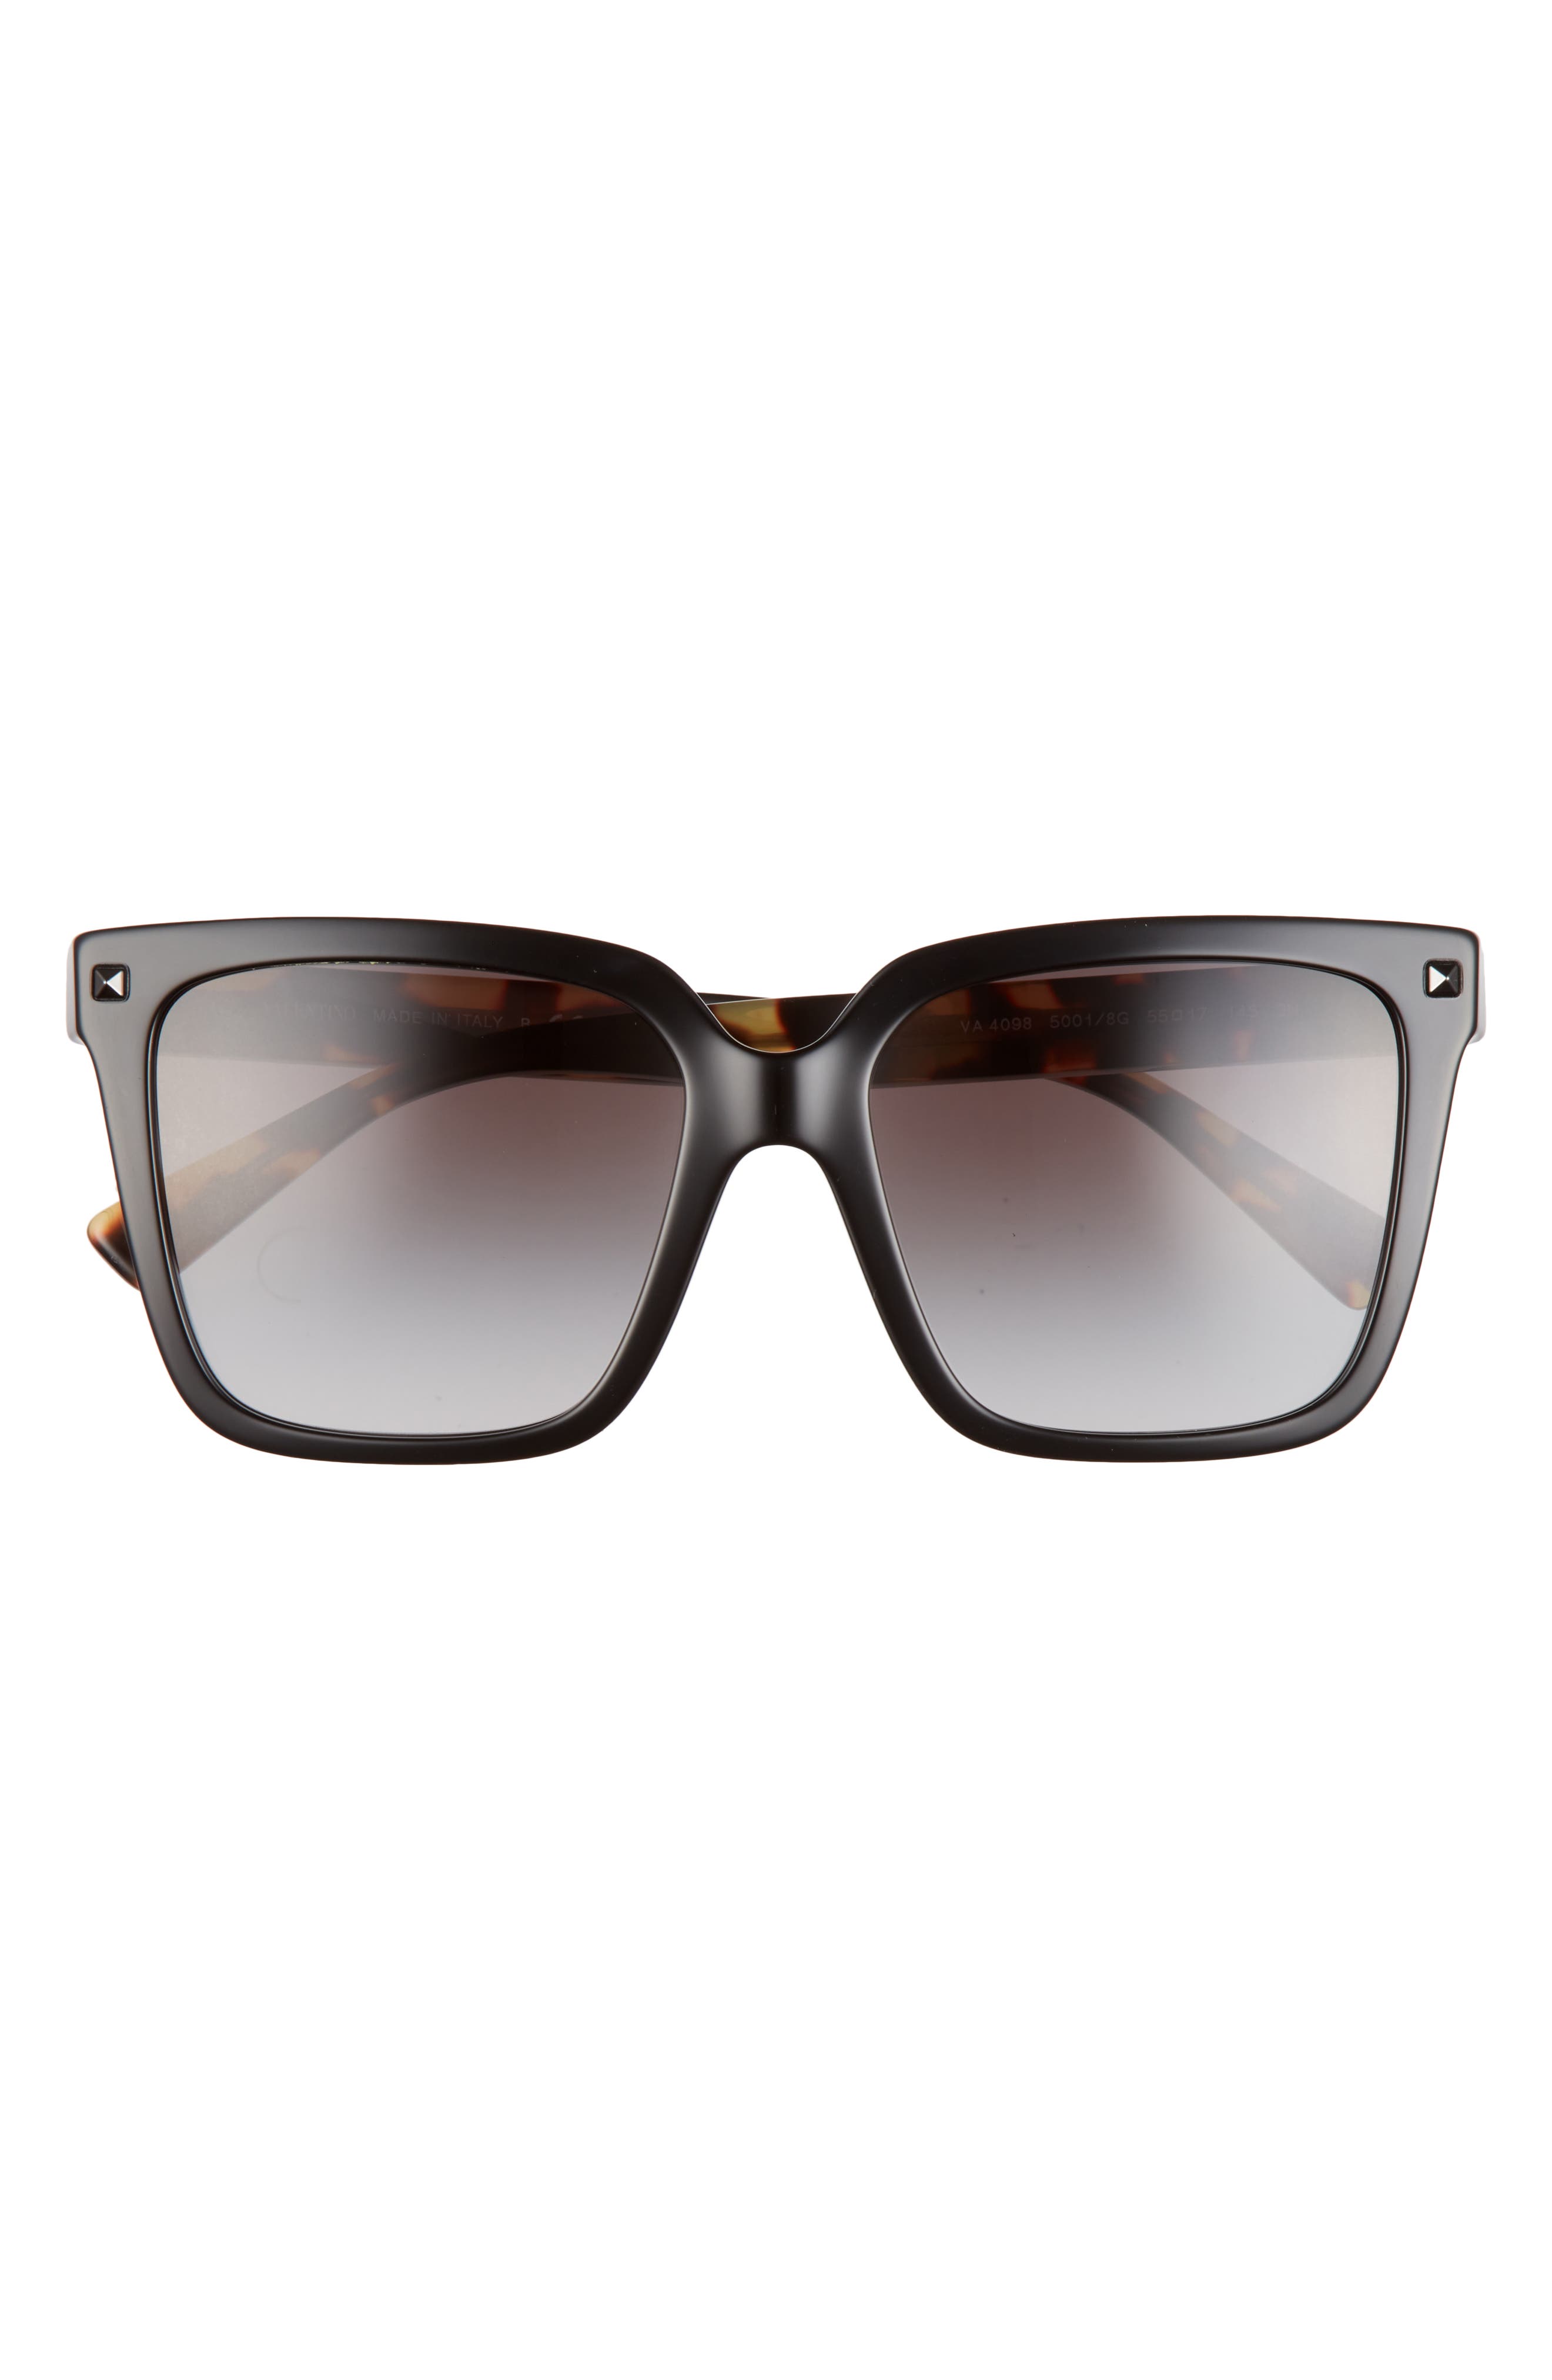 Valentino 55mm Square Sunglasses in Black/Grey Gradient at Nordstrom